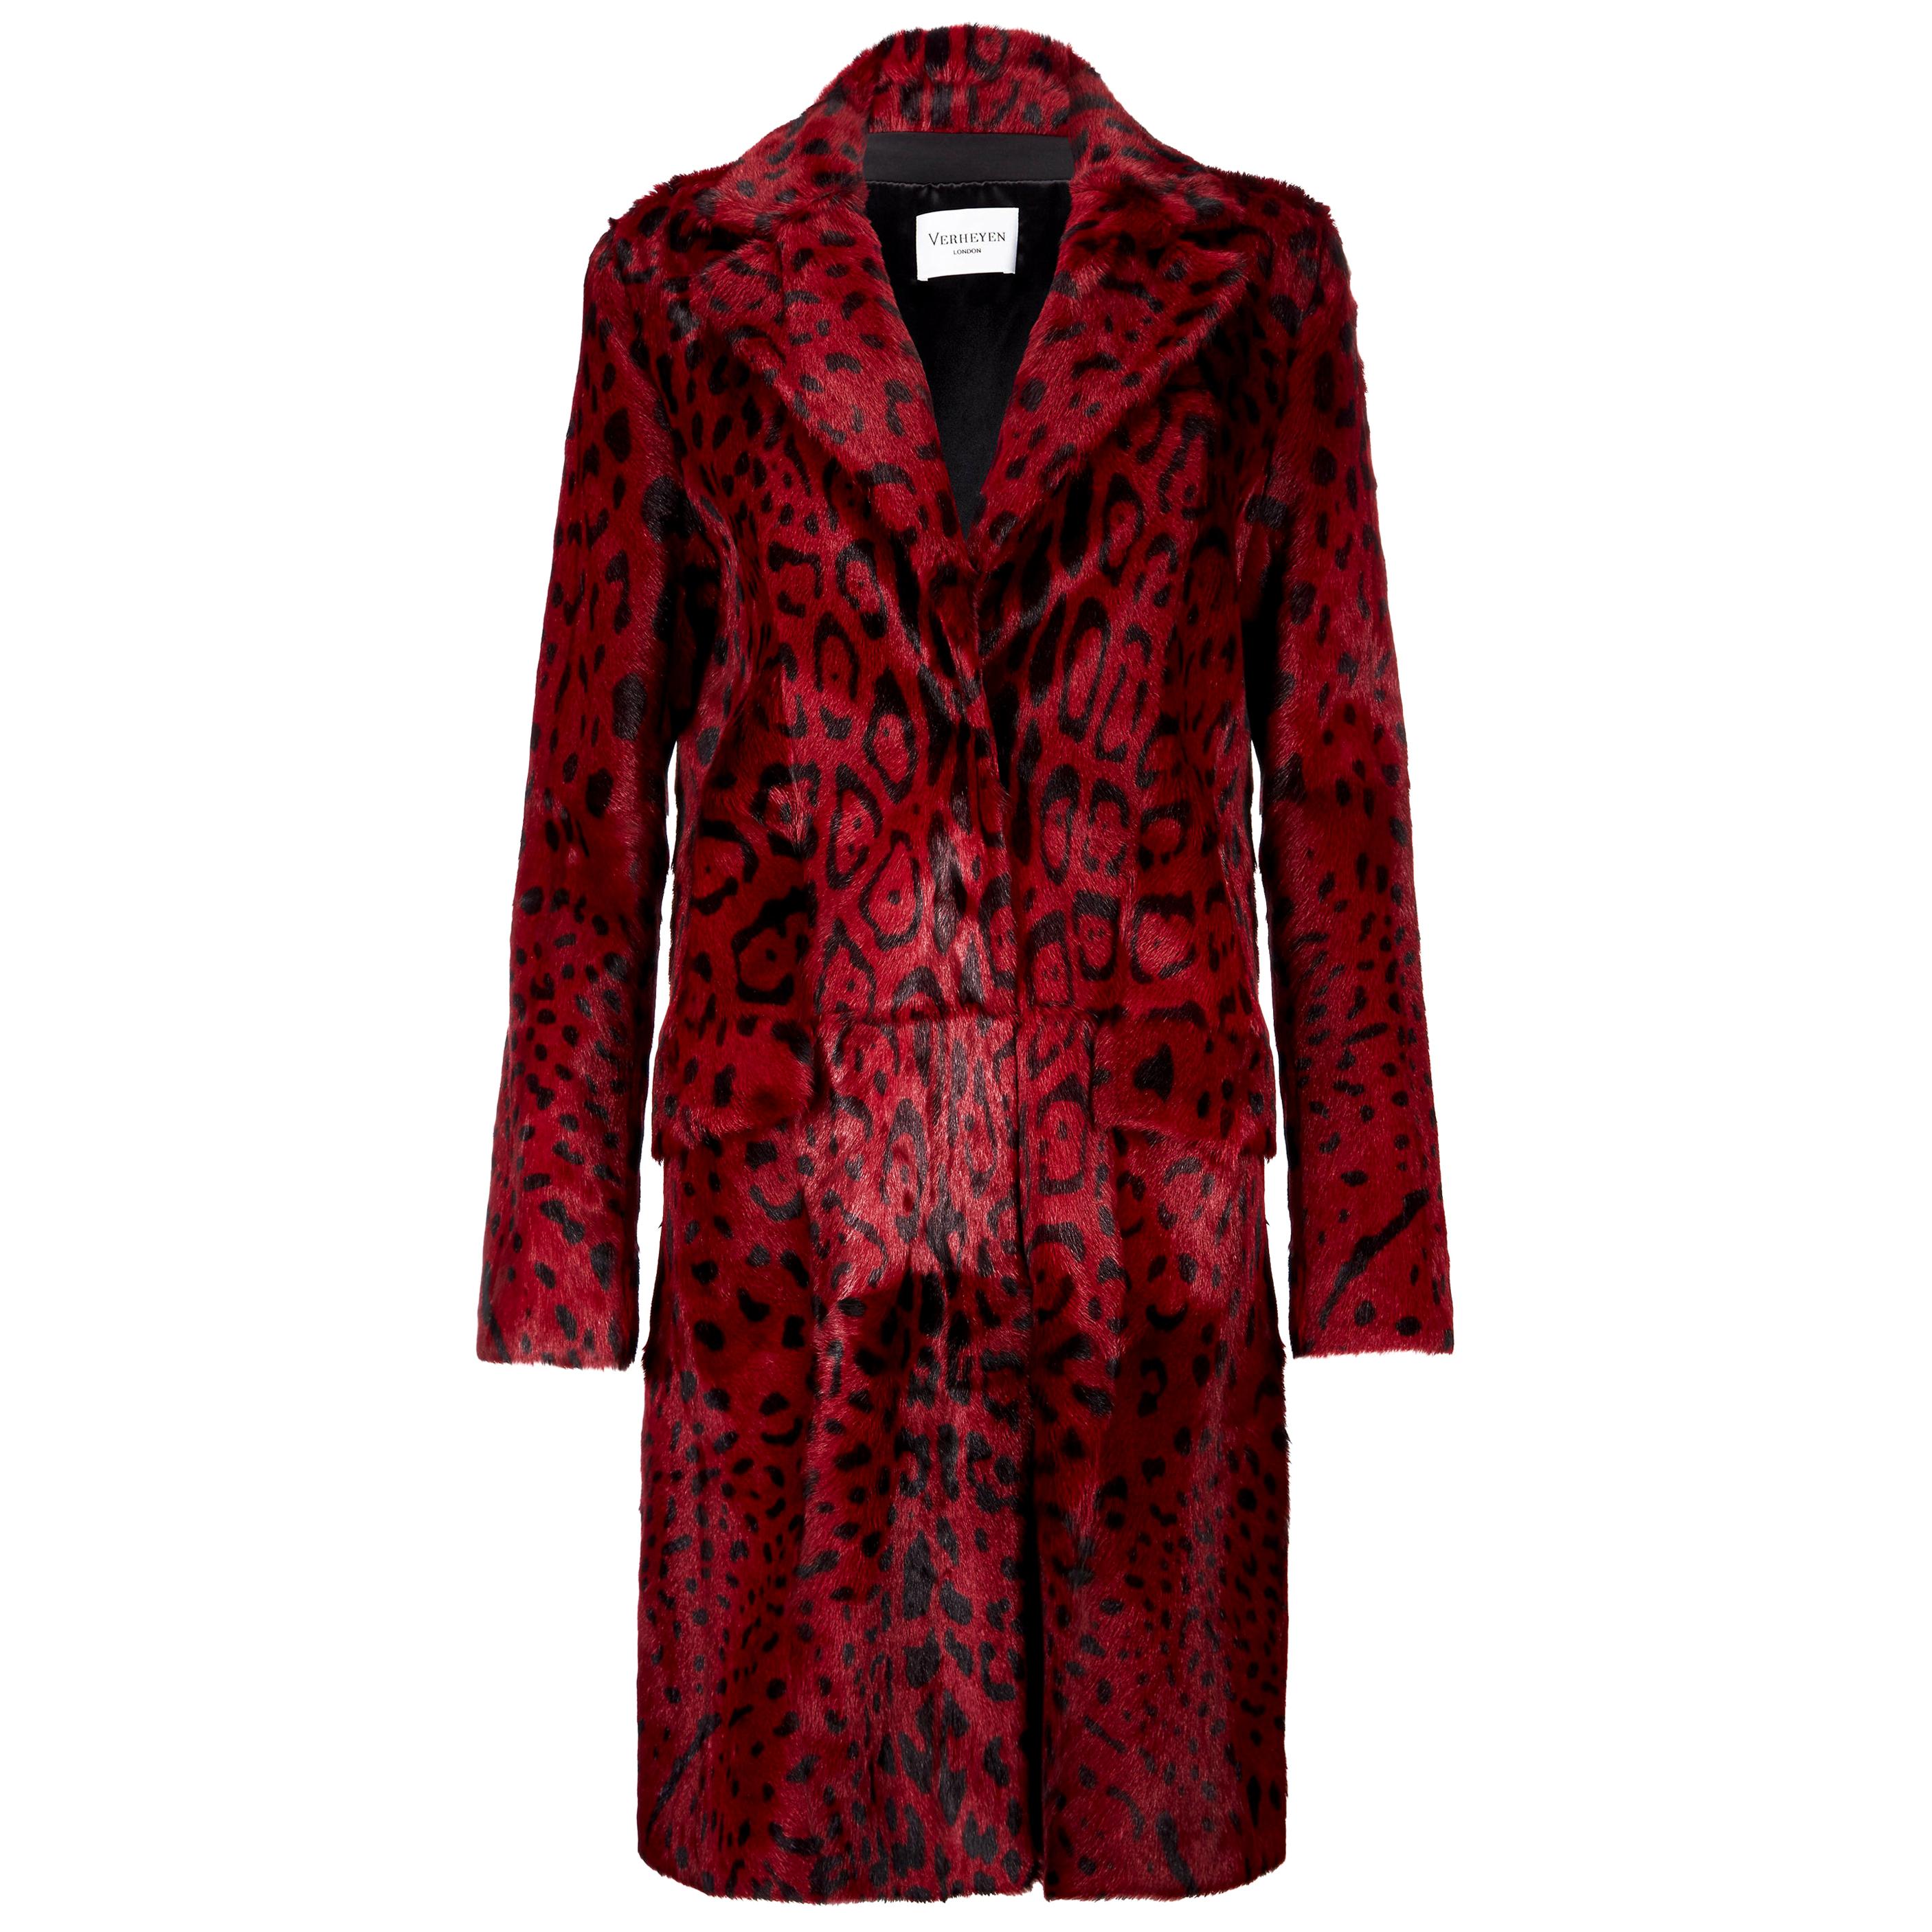 Verheyen London Leopard Print Coat in Red Ruby Goat Hair Fur UK 10 - Brand New 